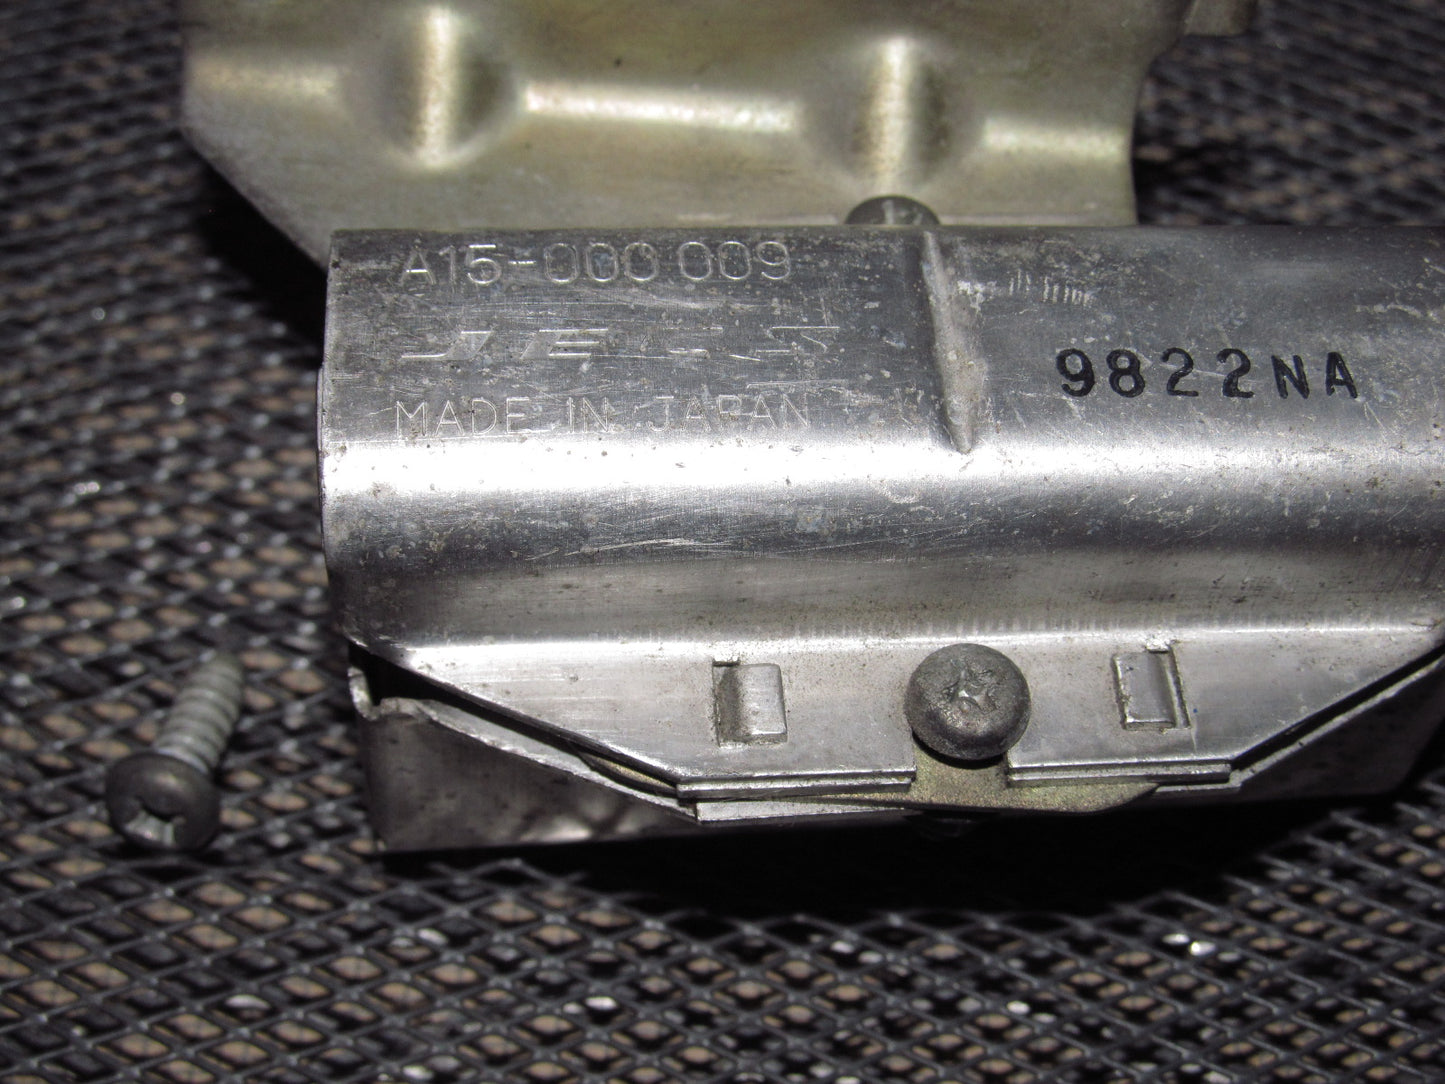 79 80 Datsun 280zx OEM 2.8L Fuel Injector Resistor Unit - A15-000 009